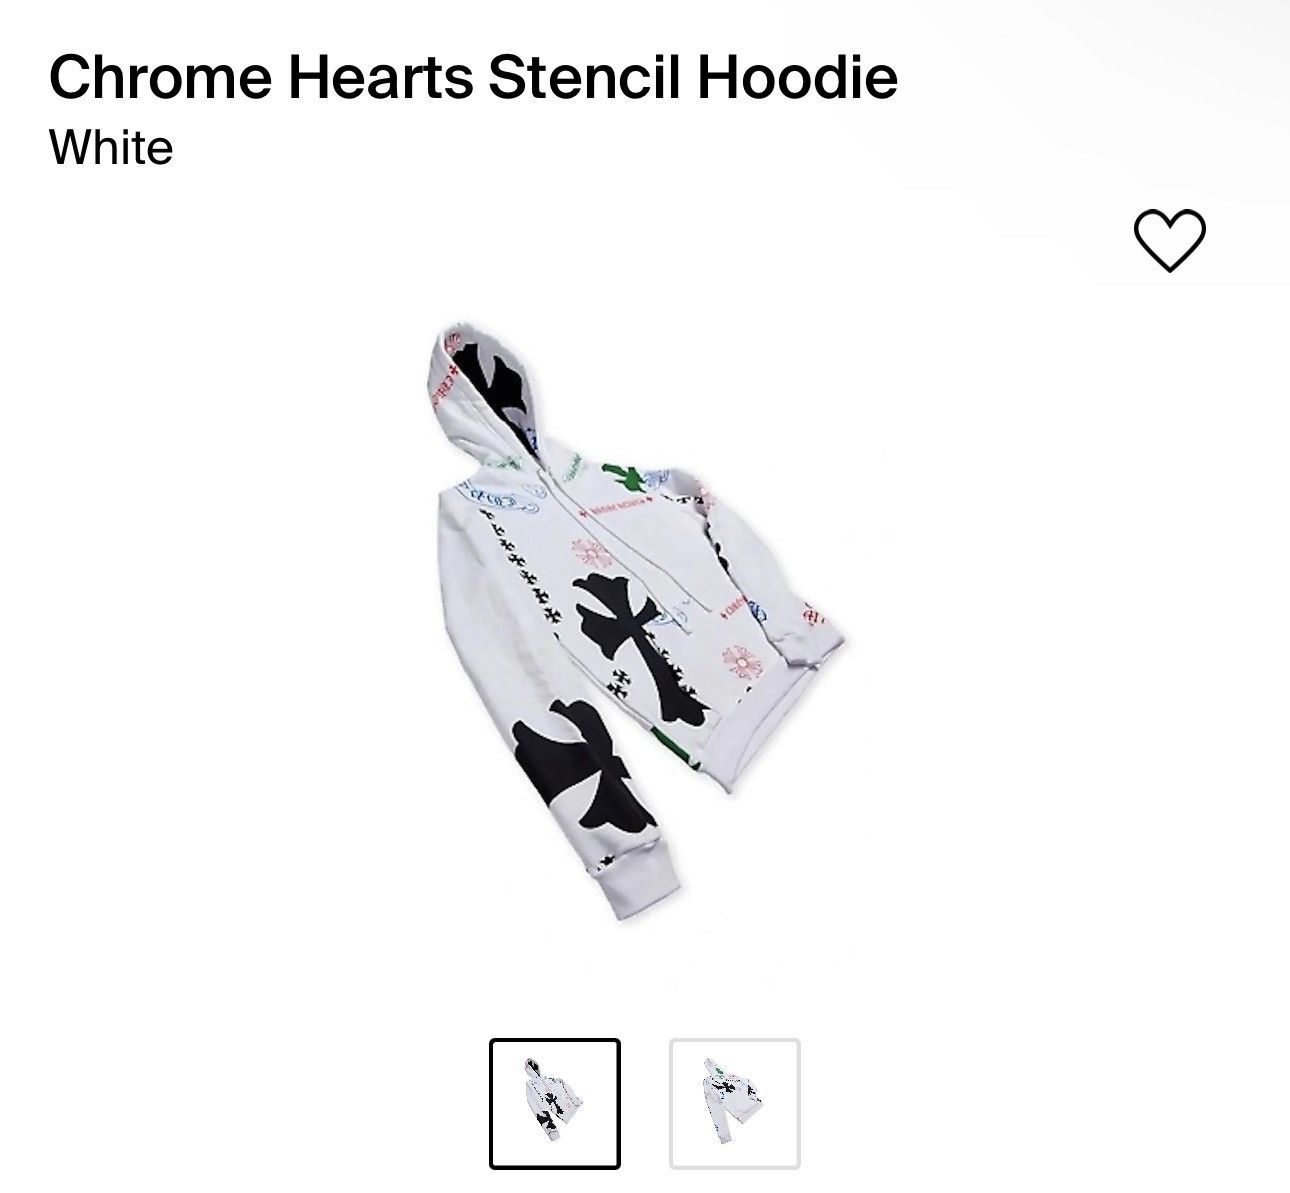 Chrome Hearts Stencil Hoodie White